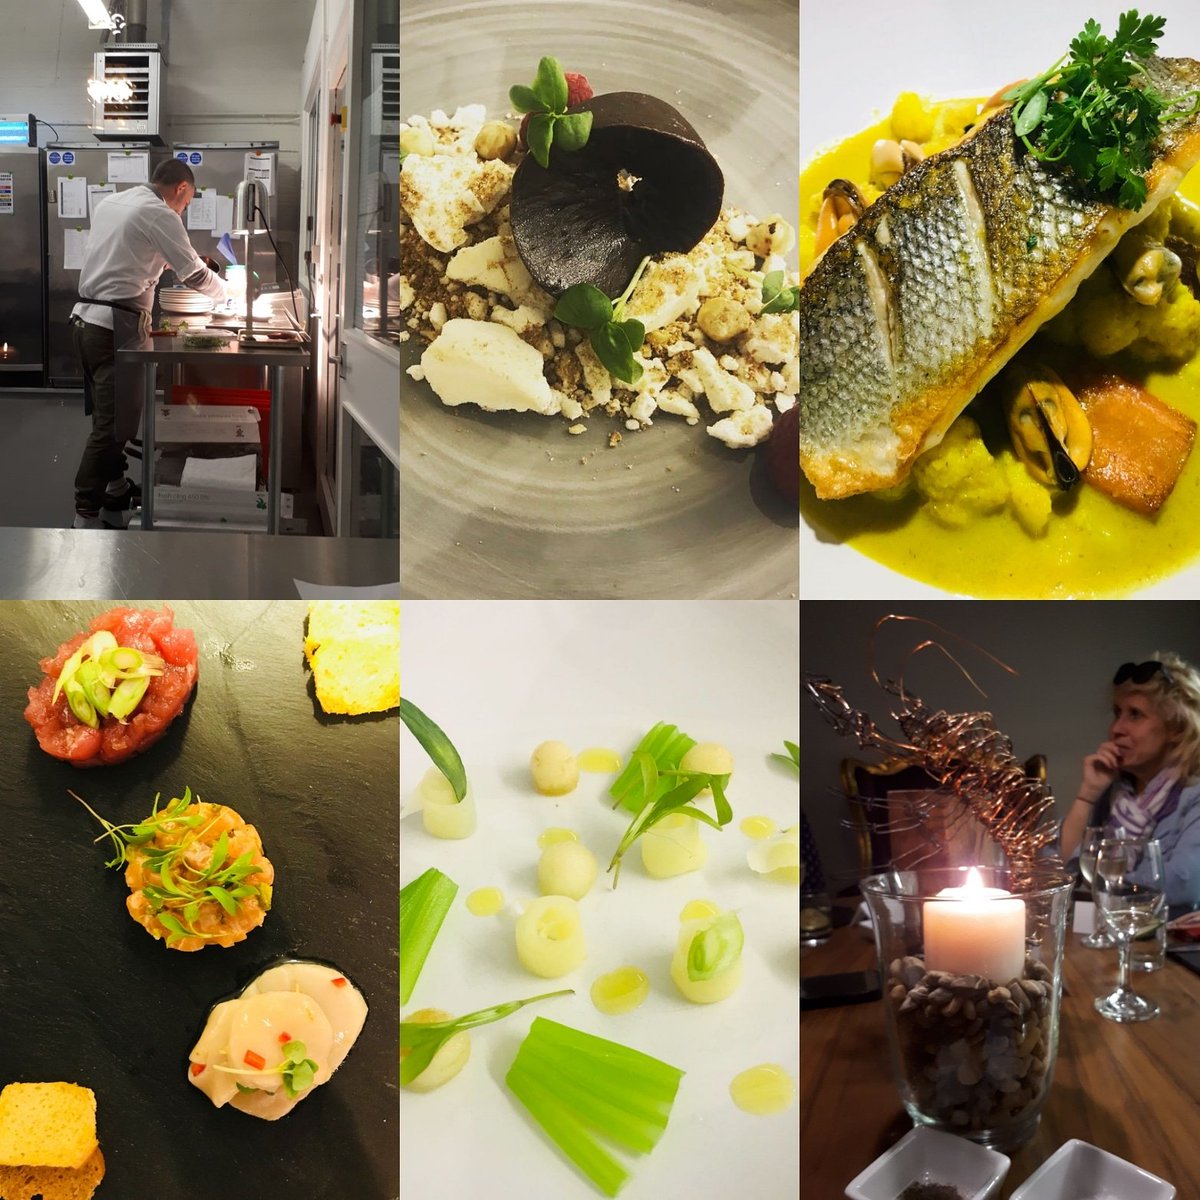 #Amazinglunch by my bestie @CaterbyBarryB #chefstable #kitchenstudio #naturetoplate #veryproud @ShonaC1963 @slabille #Edinburgh #Leith